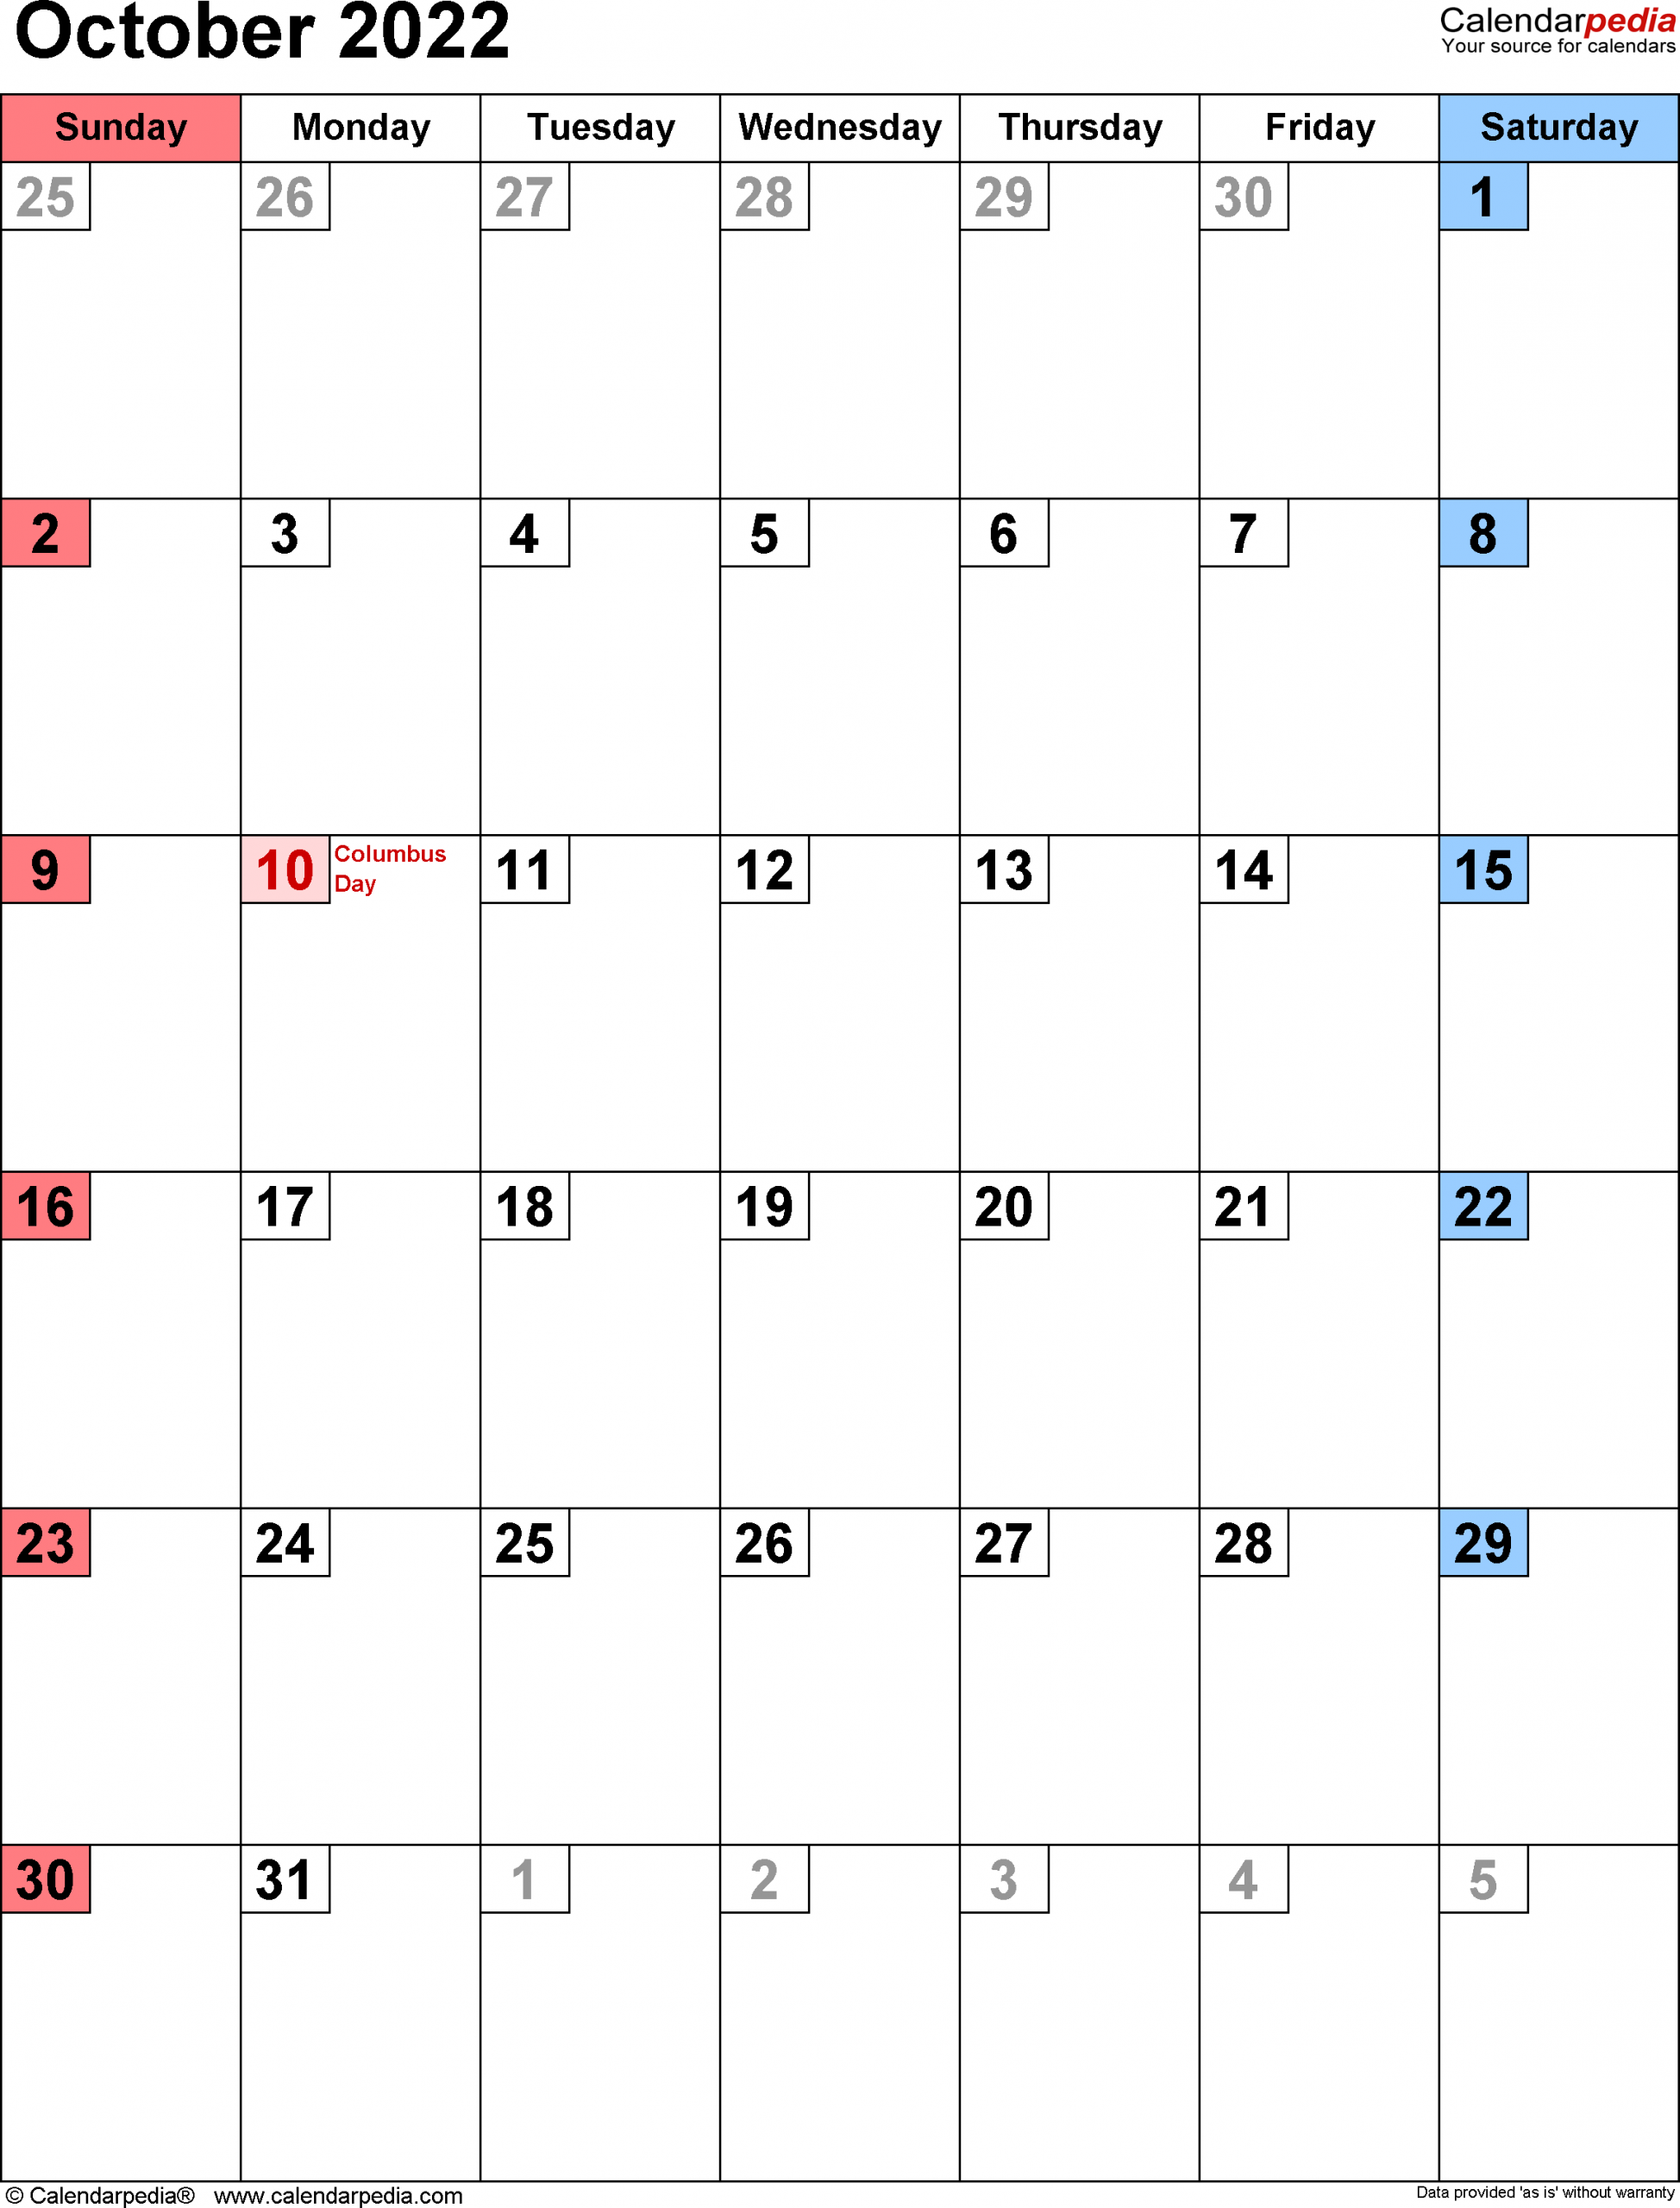 October 2022 Calendar Views